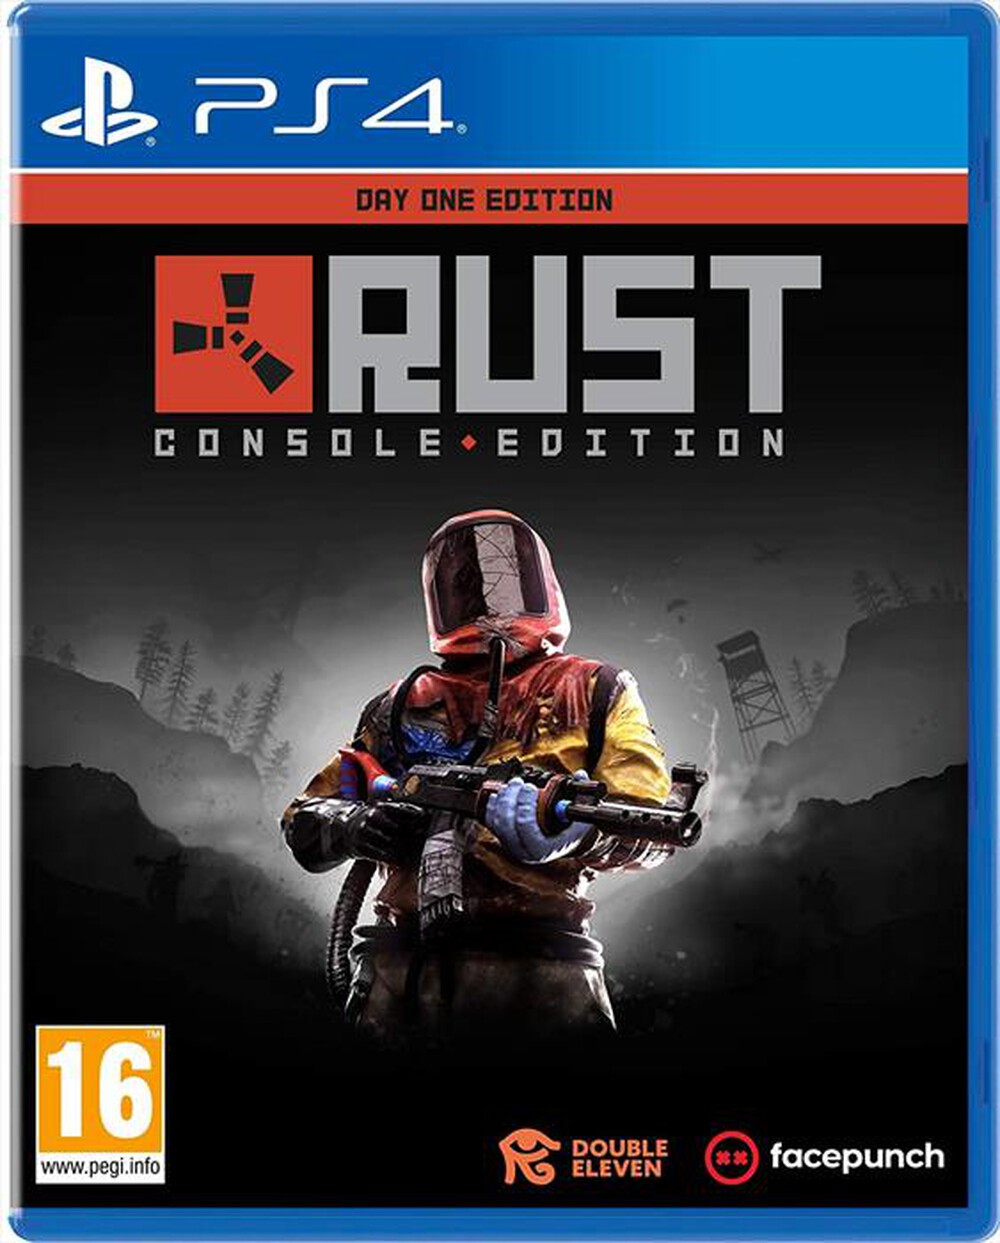 "MT-DISTRIBUTION - Rust Console Edition"